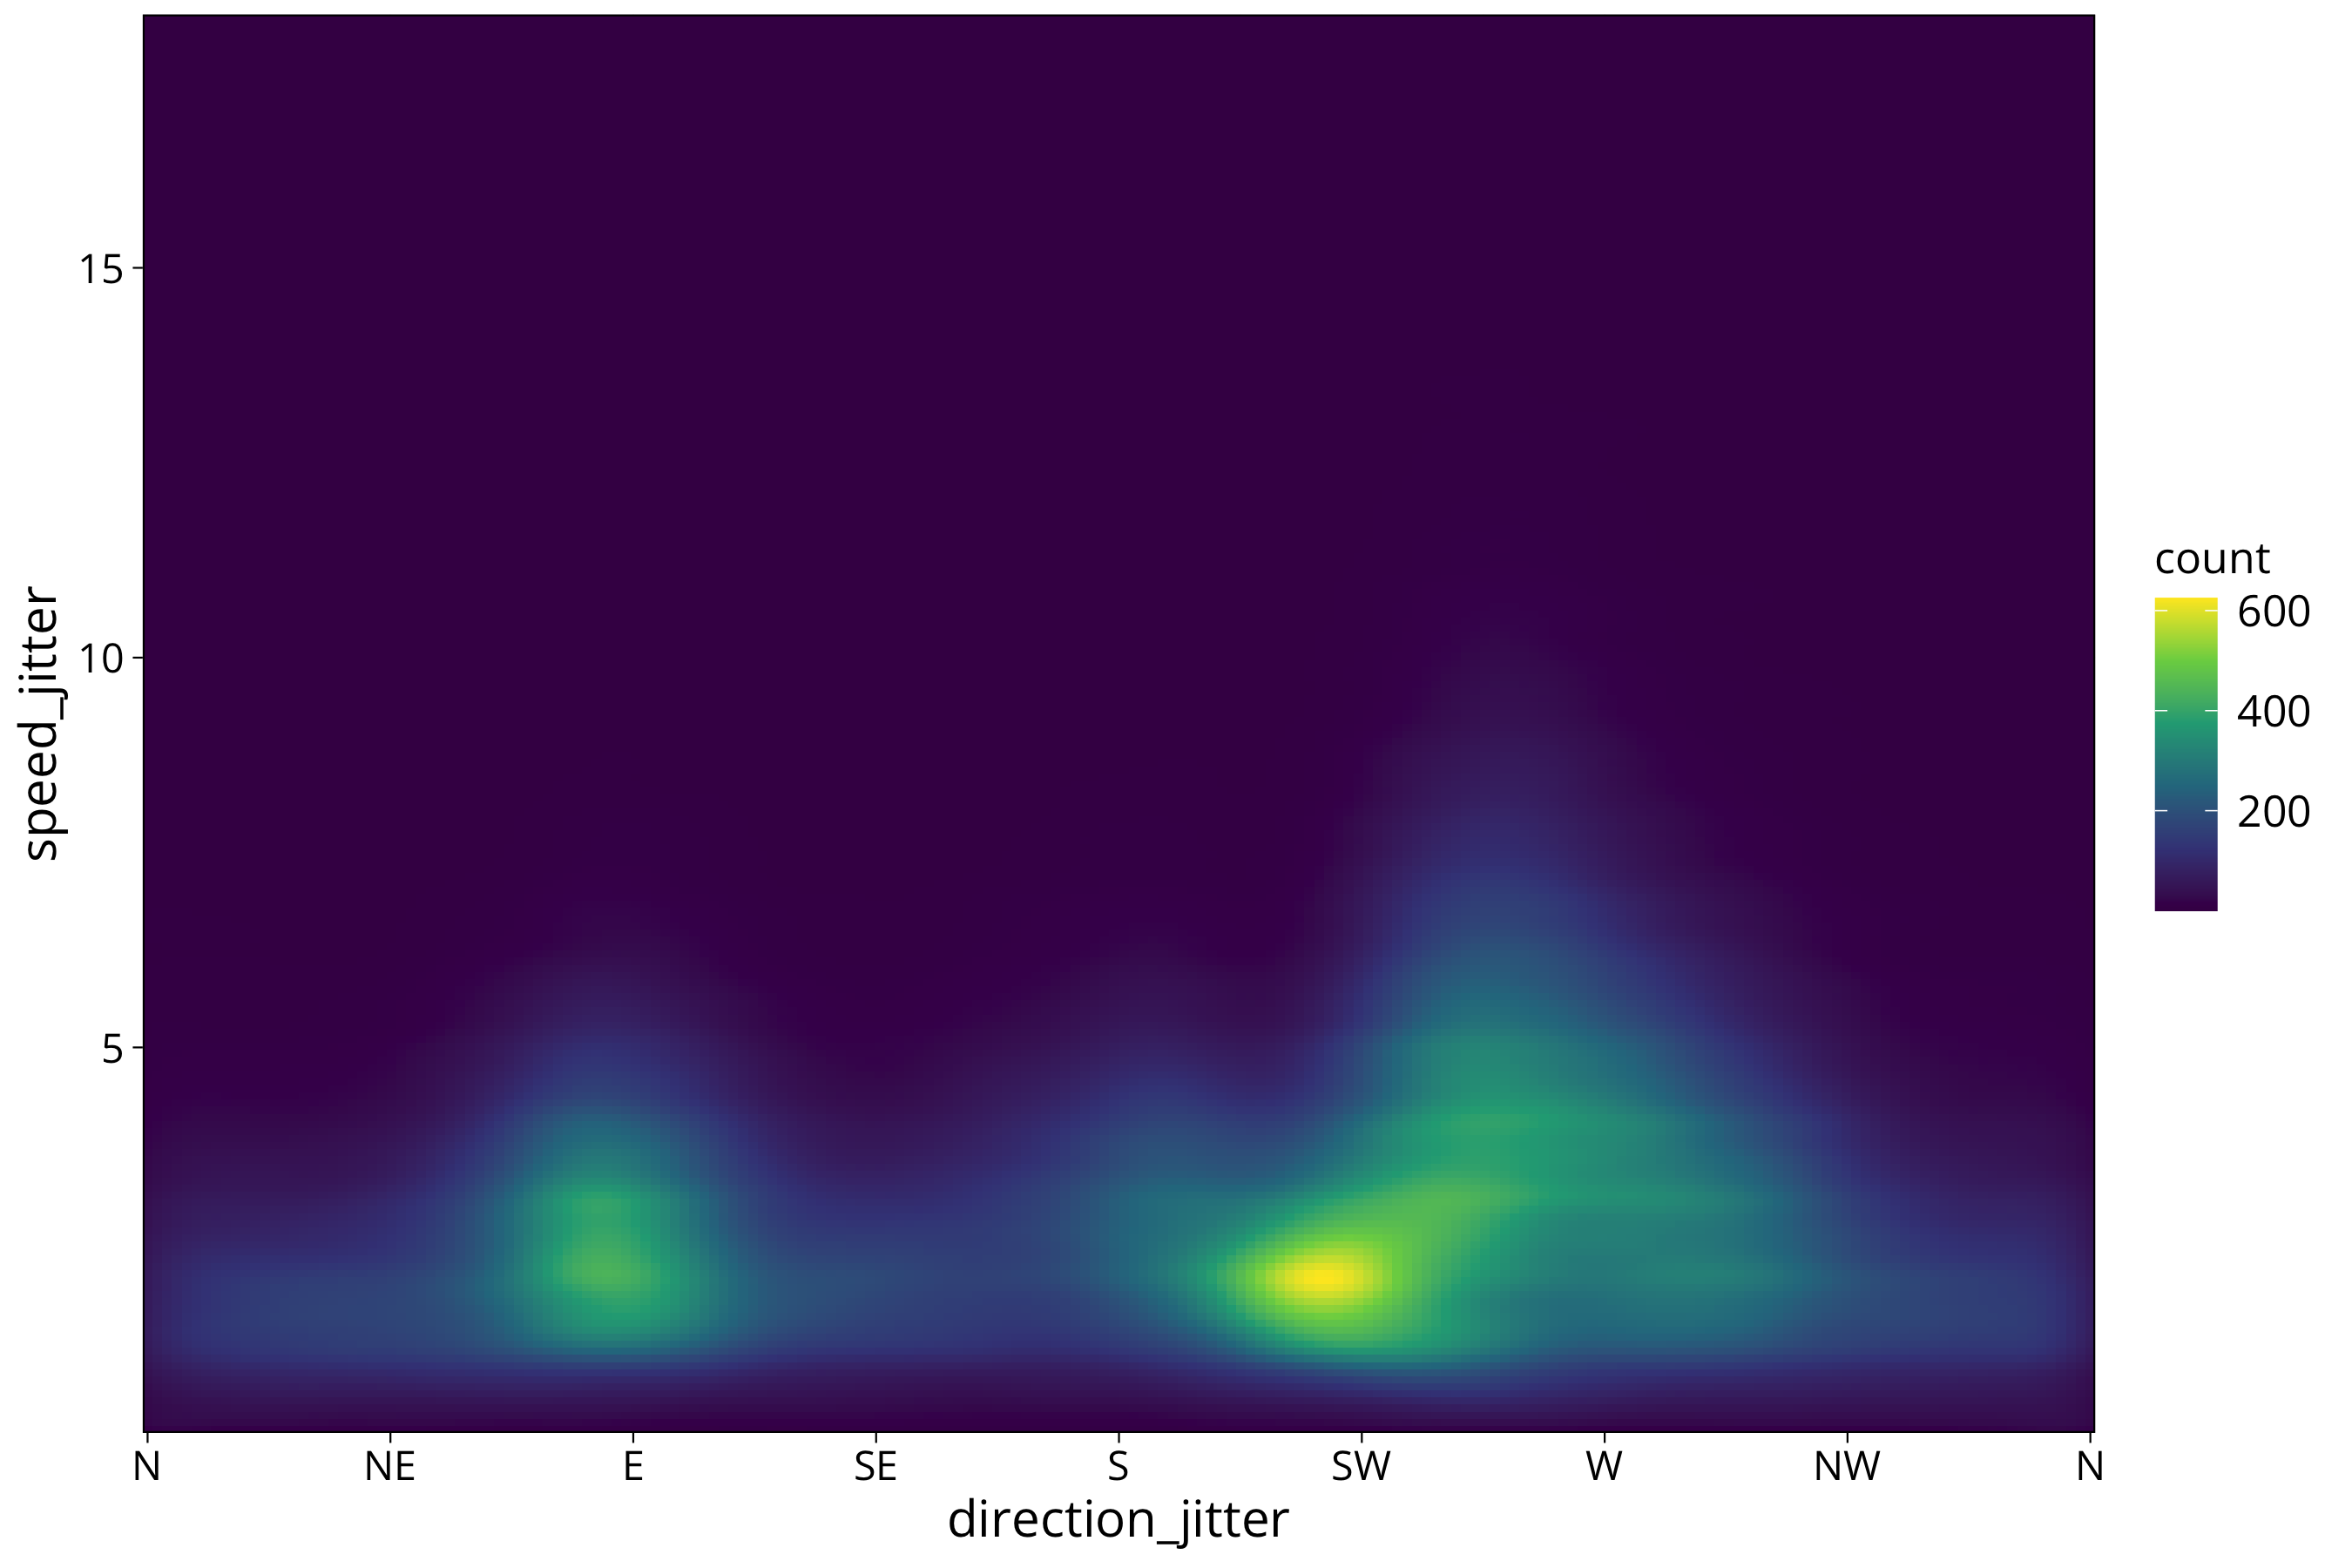 plot of chunk smooth density